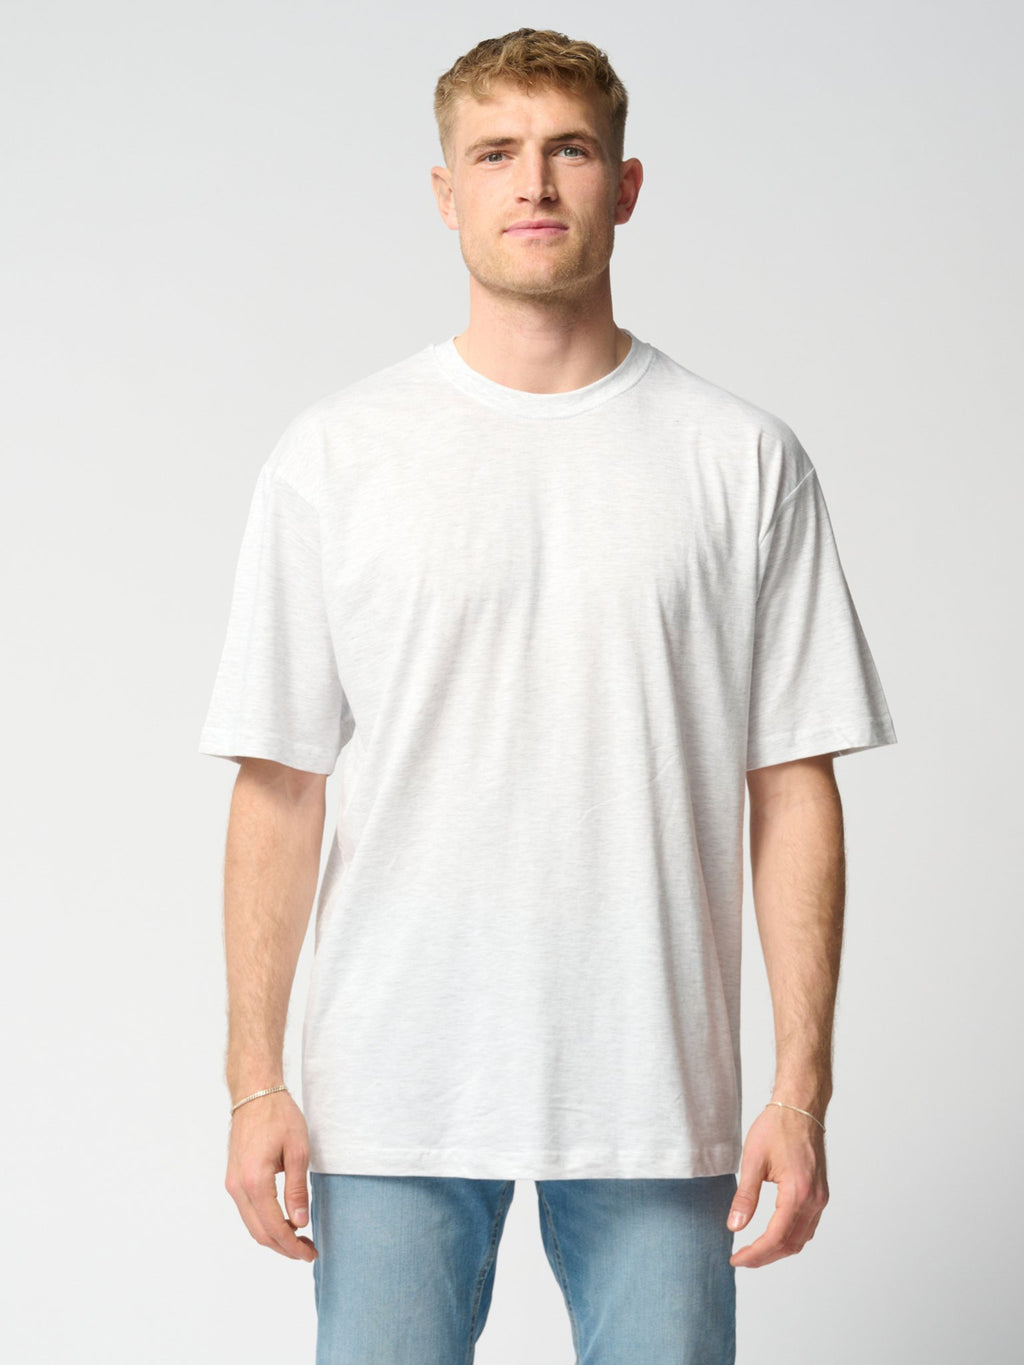 Oversized T-Shirts - Paketangebot (9 Stk.) (FB)